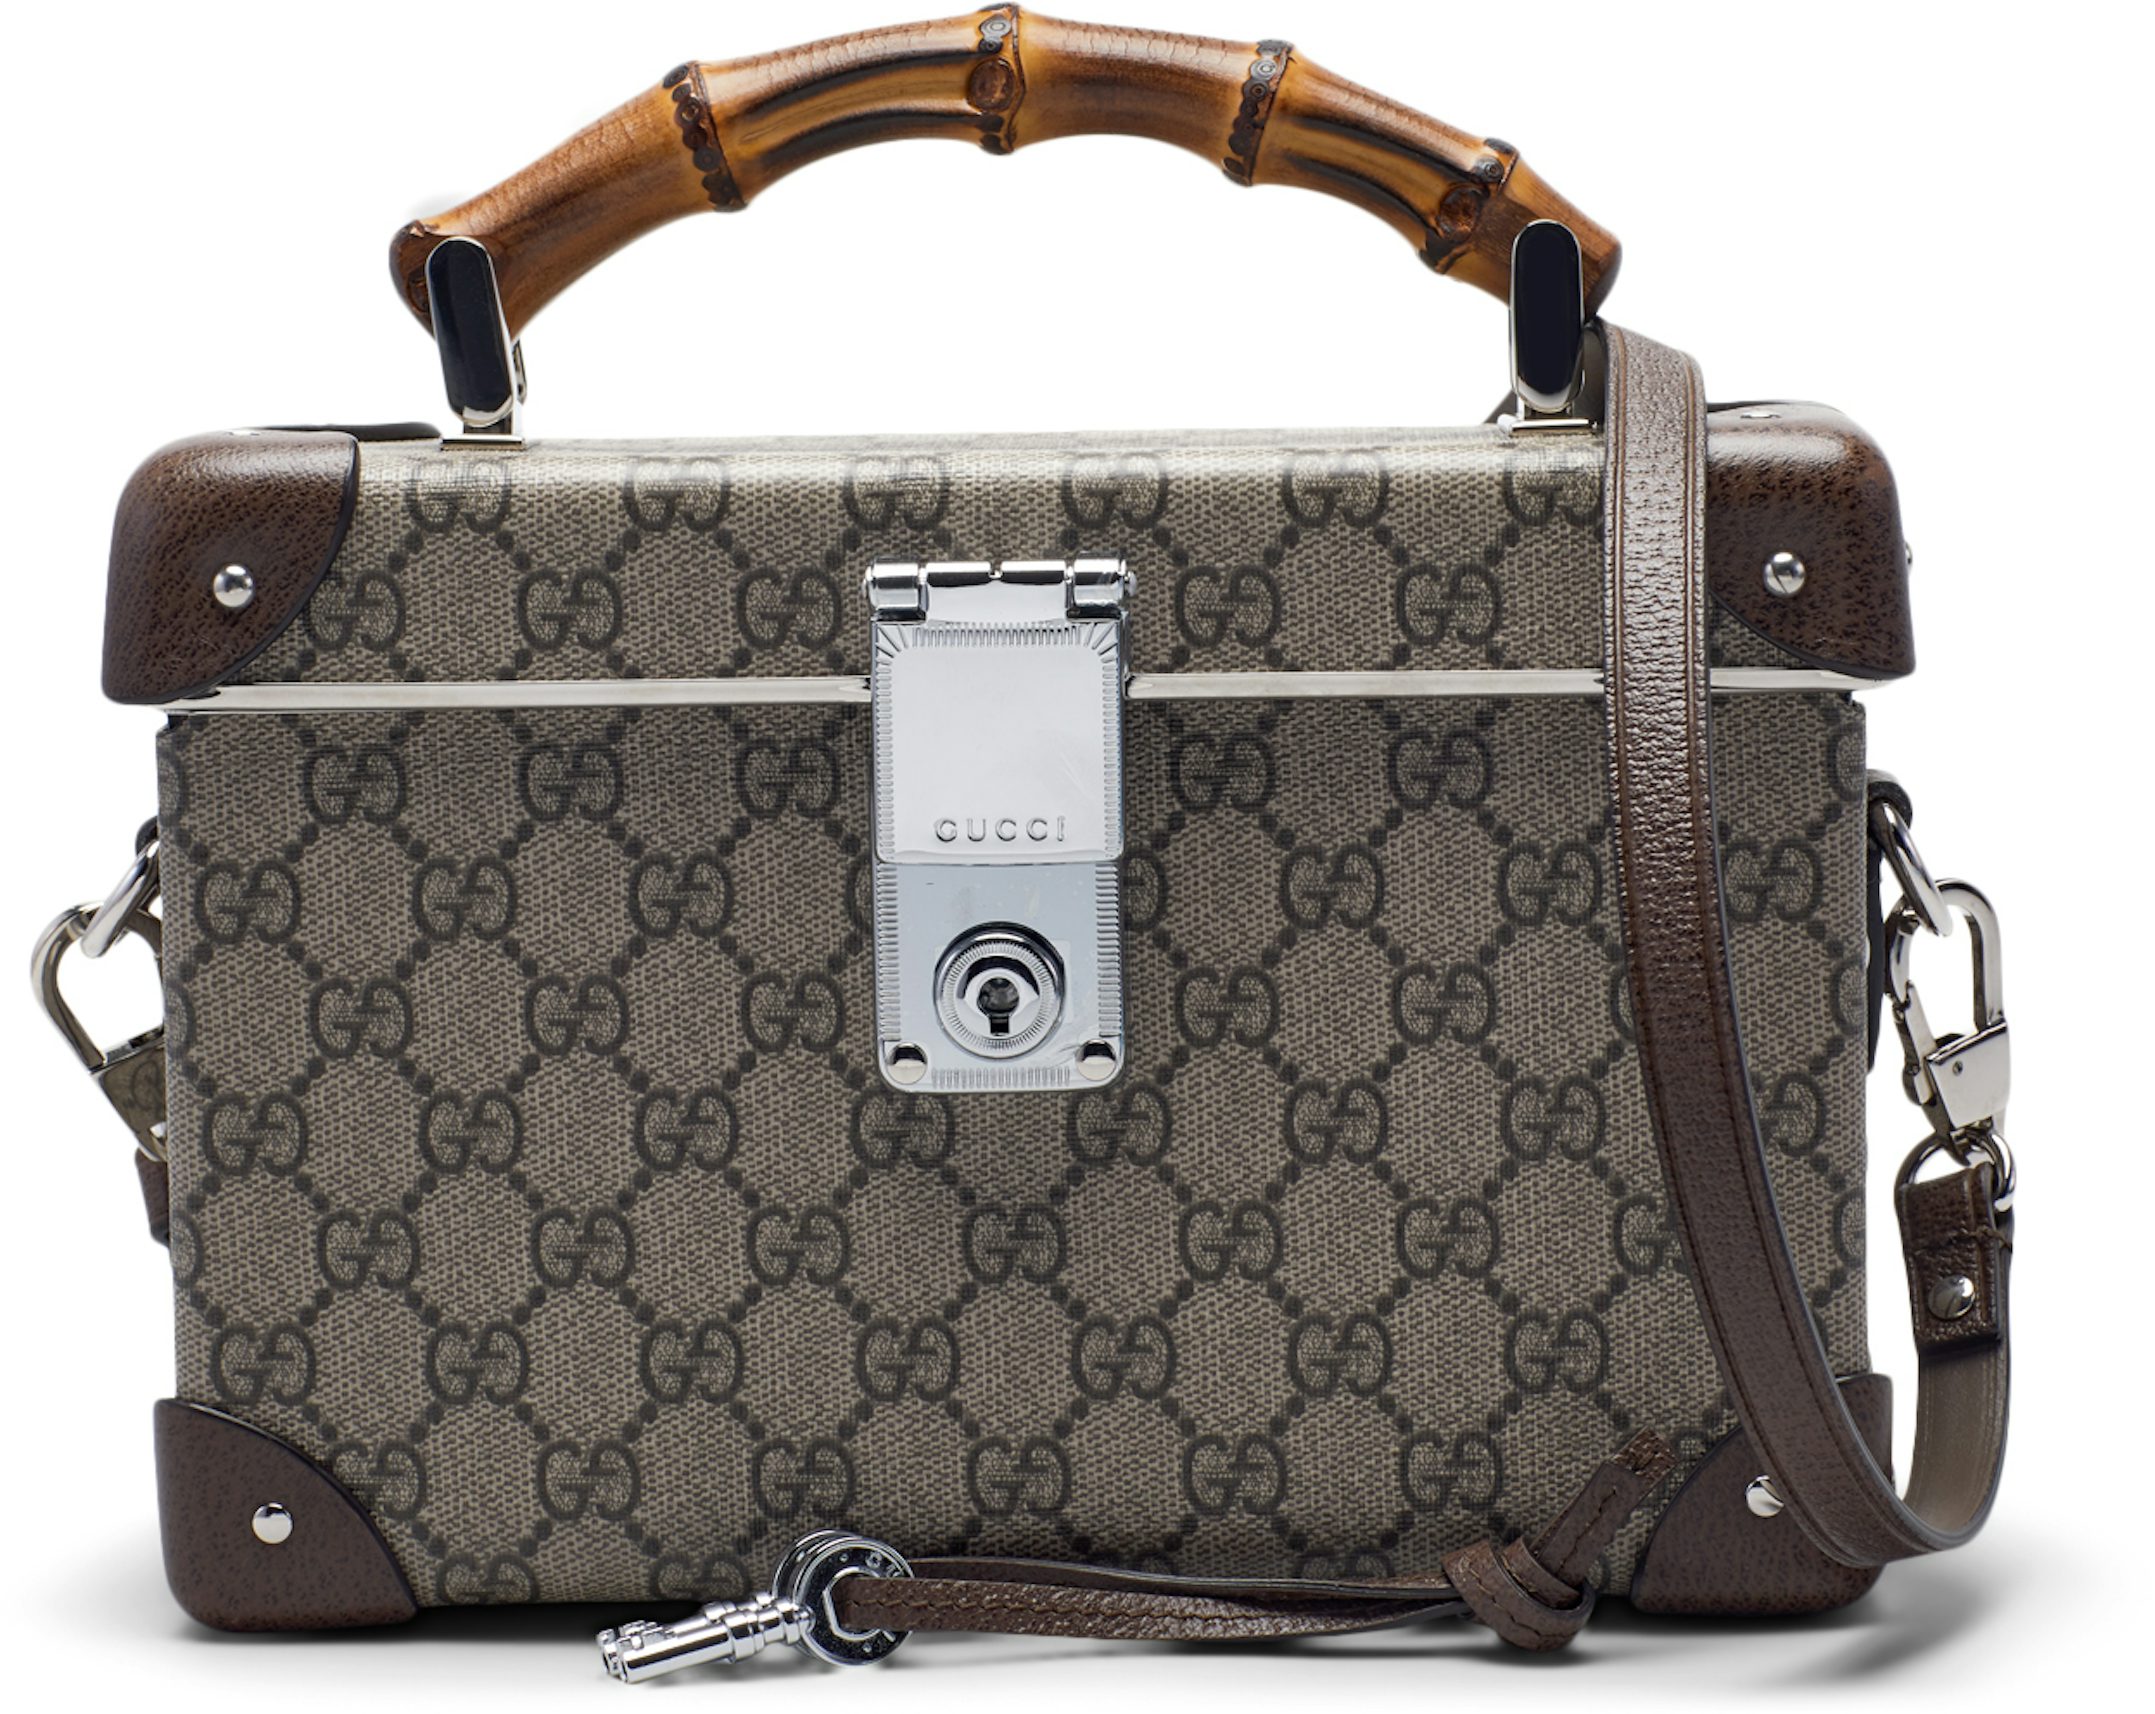 Gucci Globe-trotter gg Medium Suitcase for Men